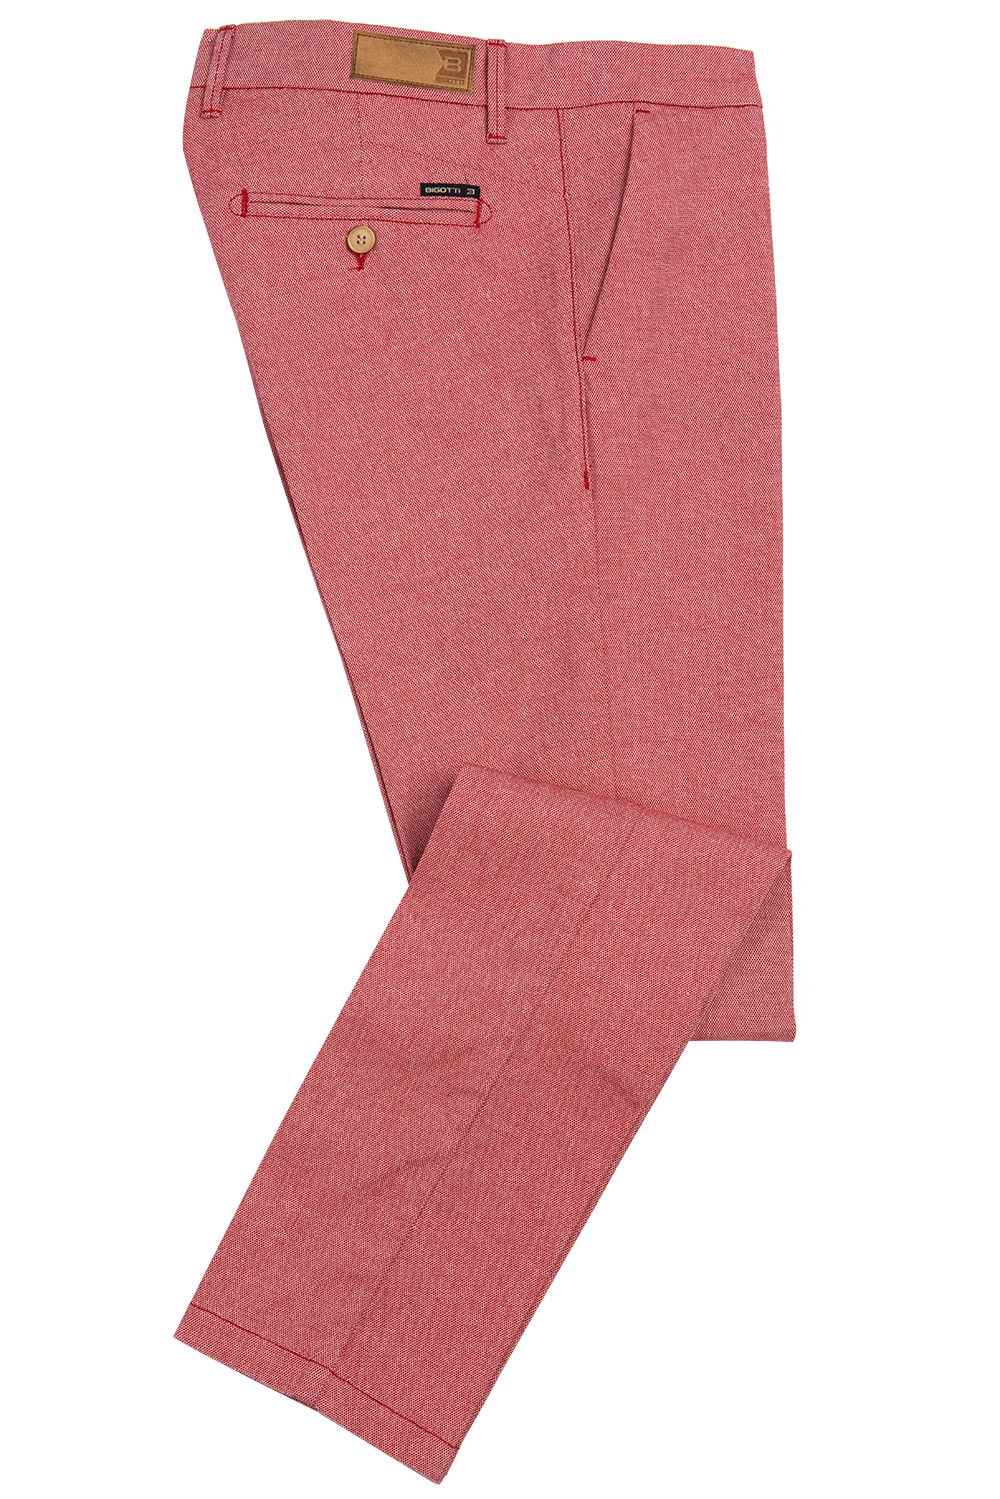 Pantaloni superslim marco roz 0